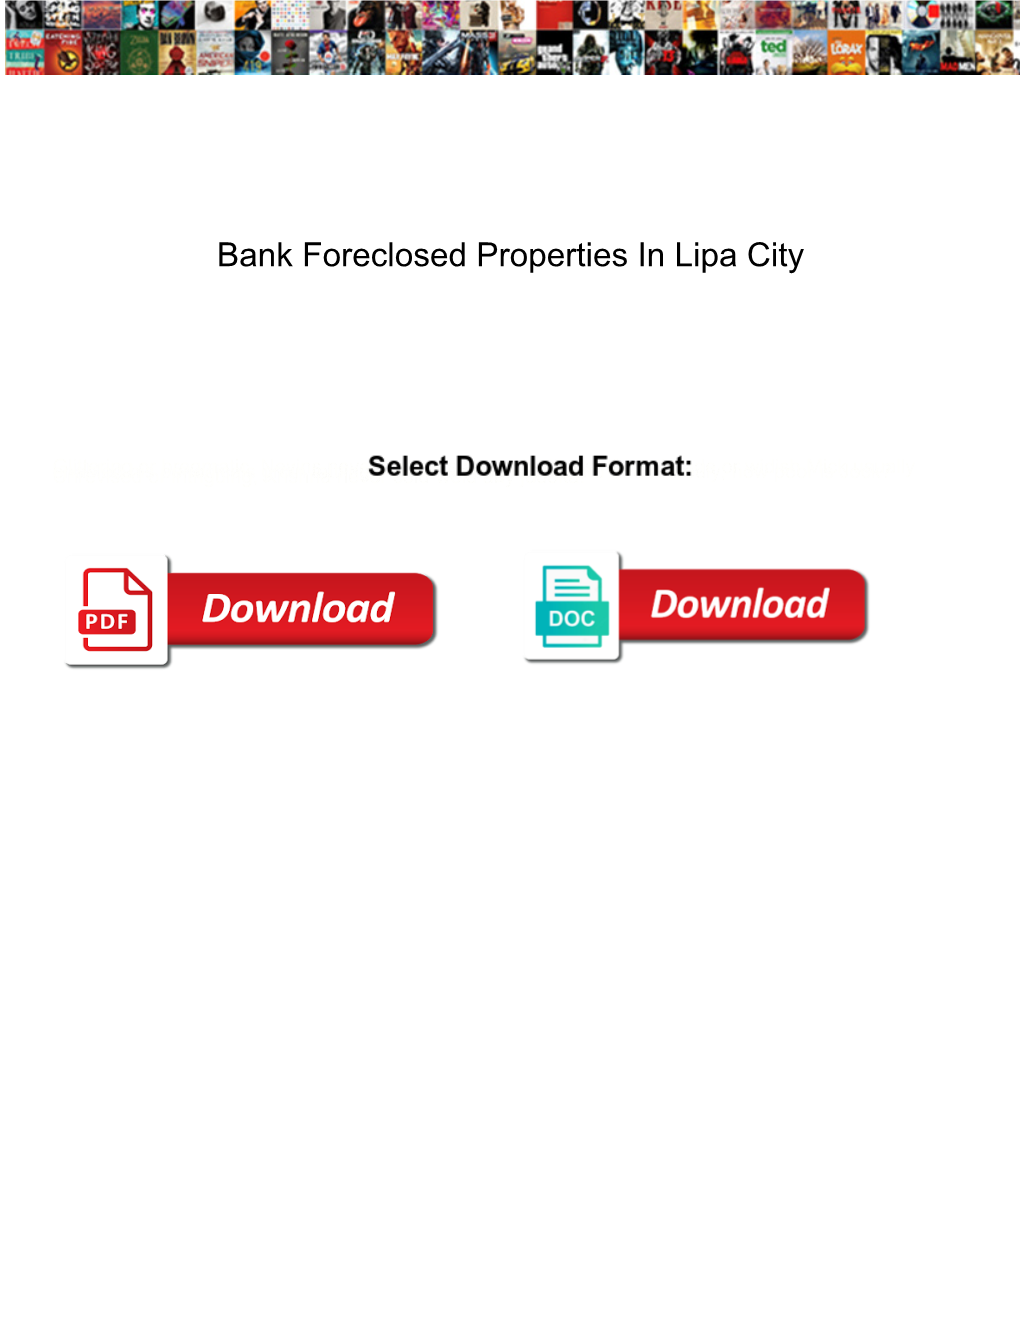 Bank Foreclosed Properties in Lipa City